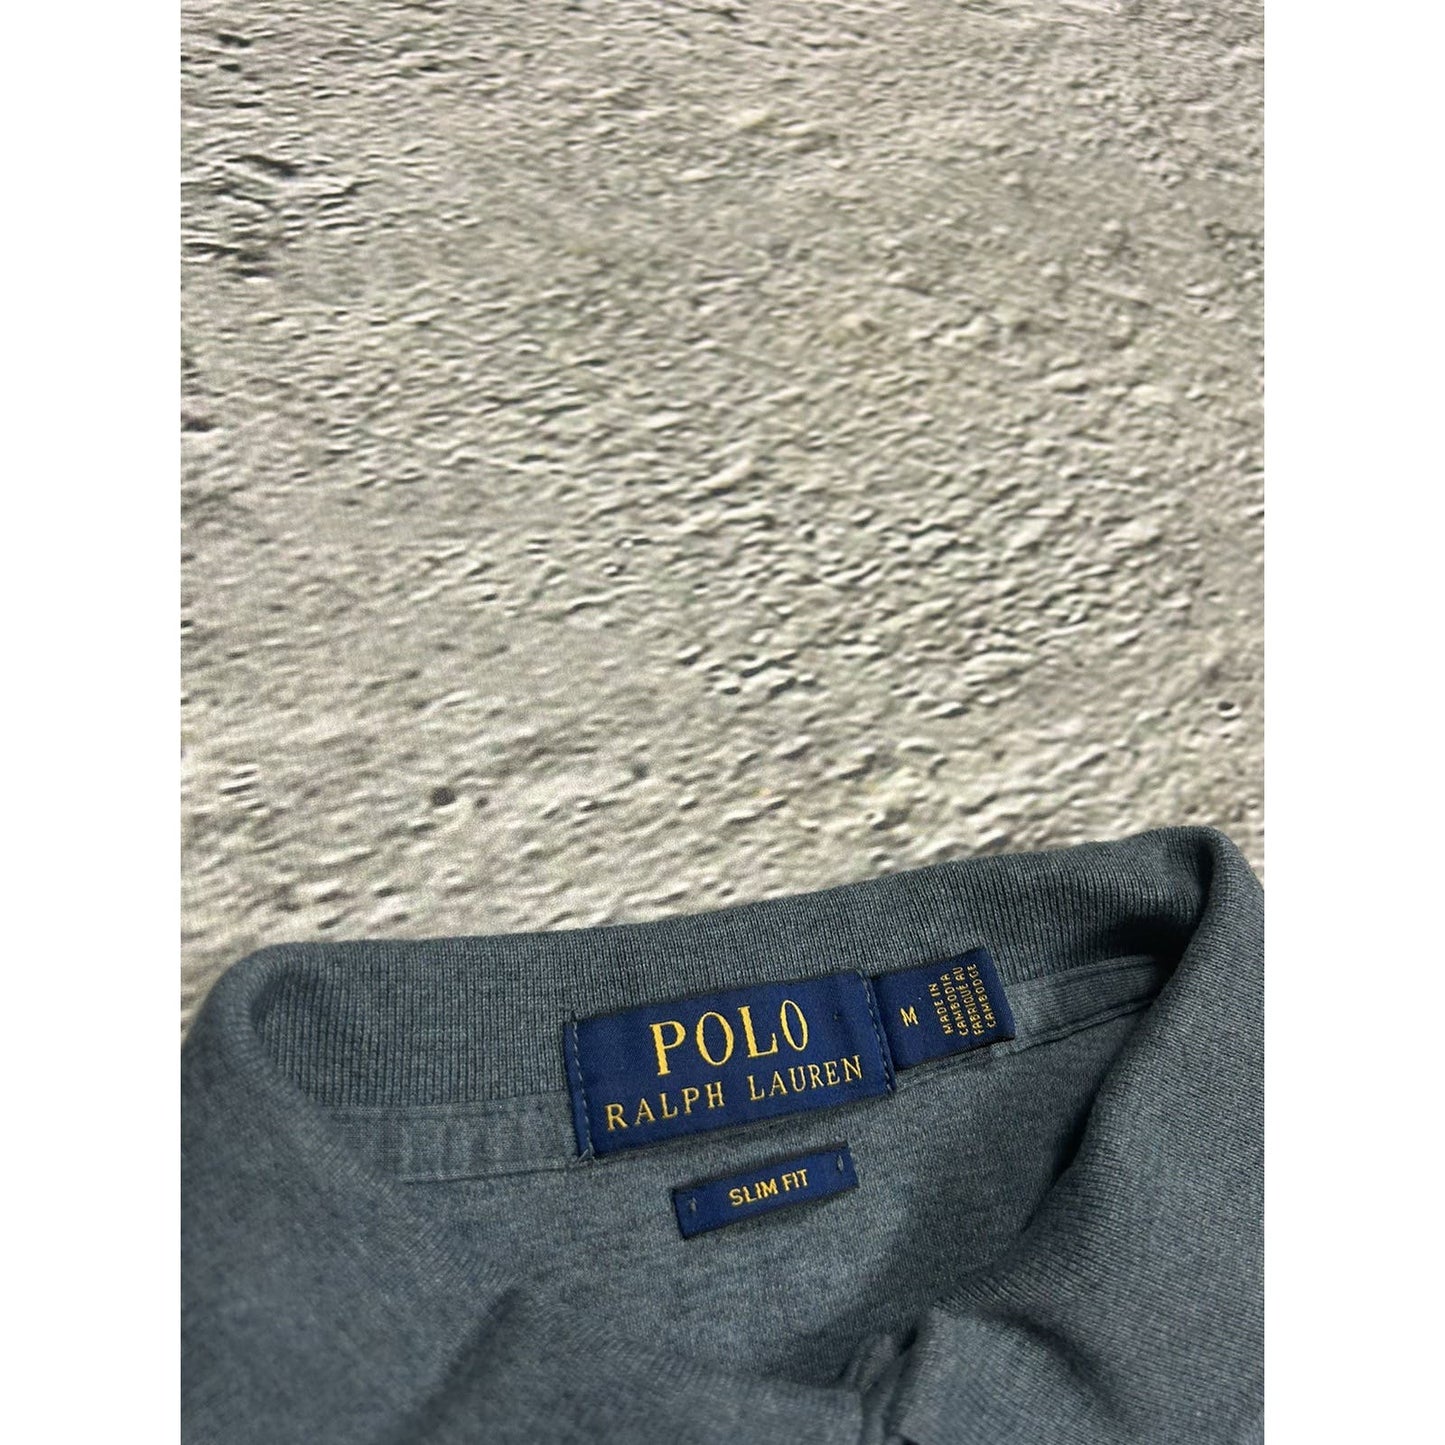 Polo Ralph Lauren vintage long sleeve polo grey small pony